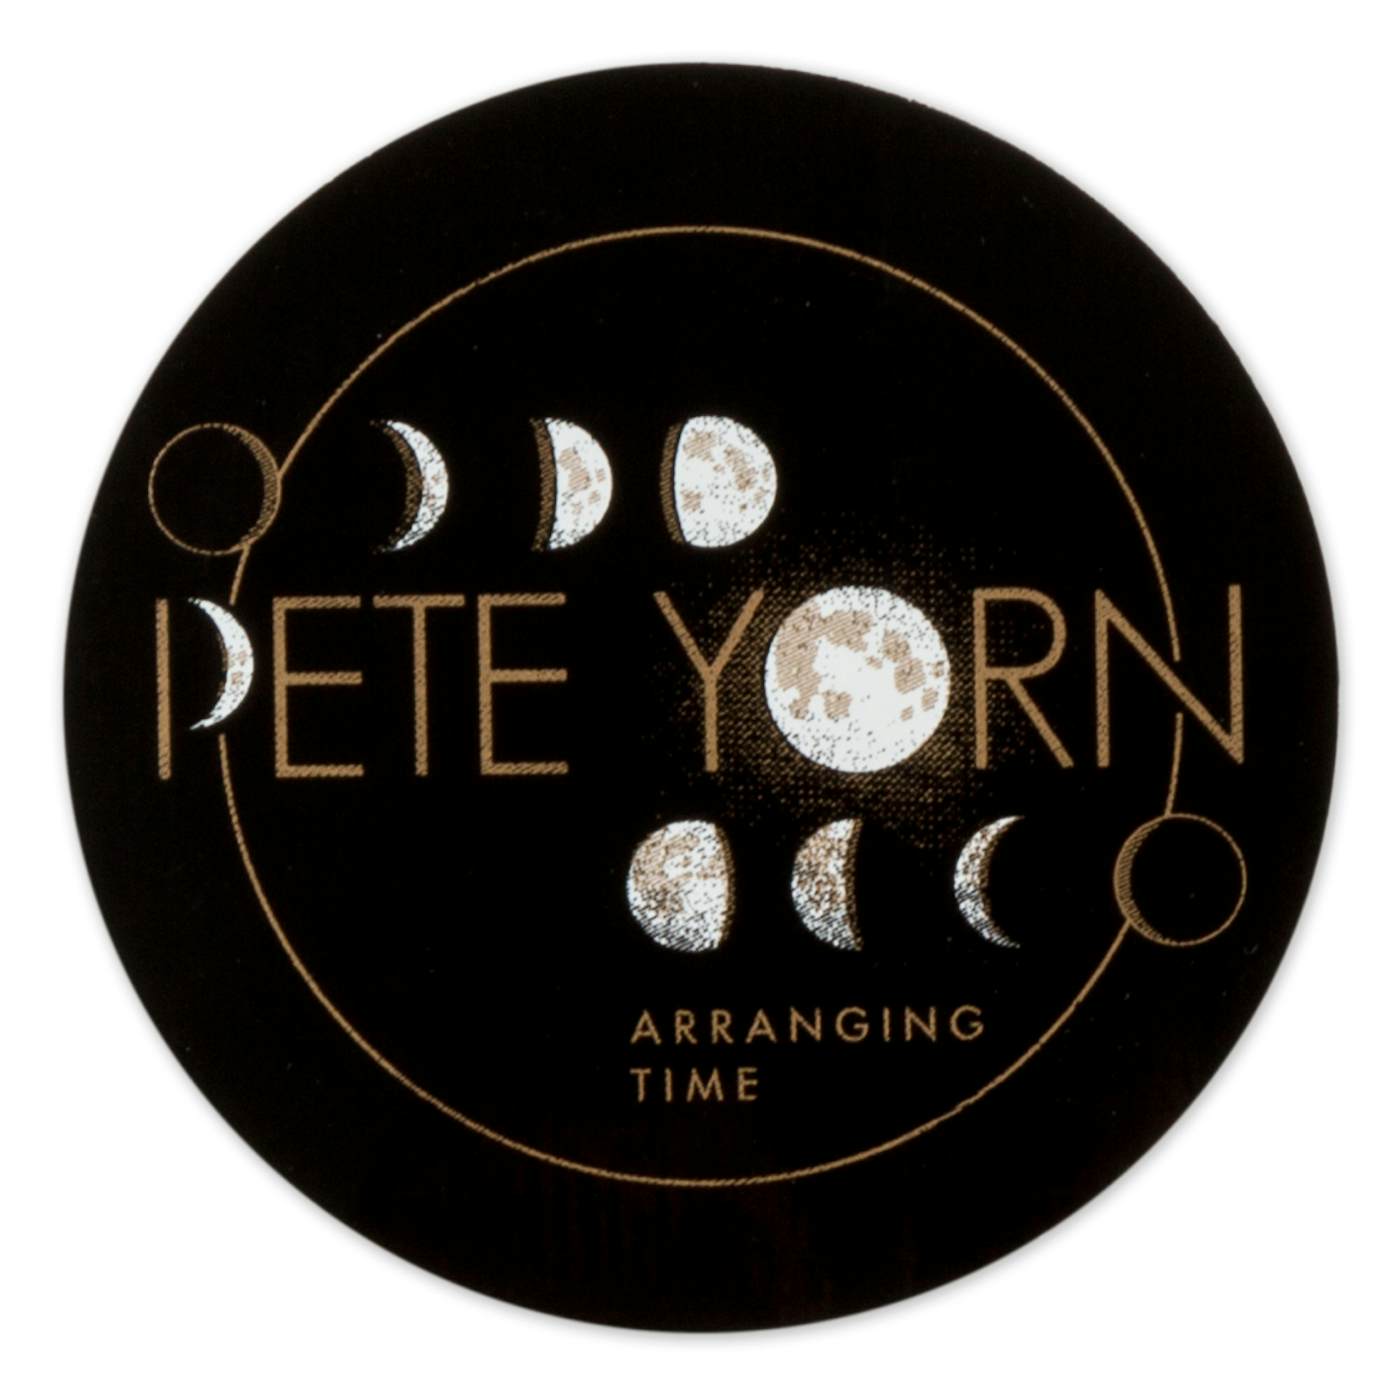 Pete Yorn Arranging Time Sticker